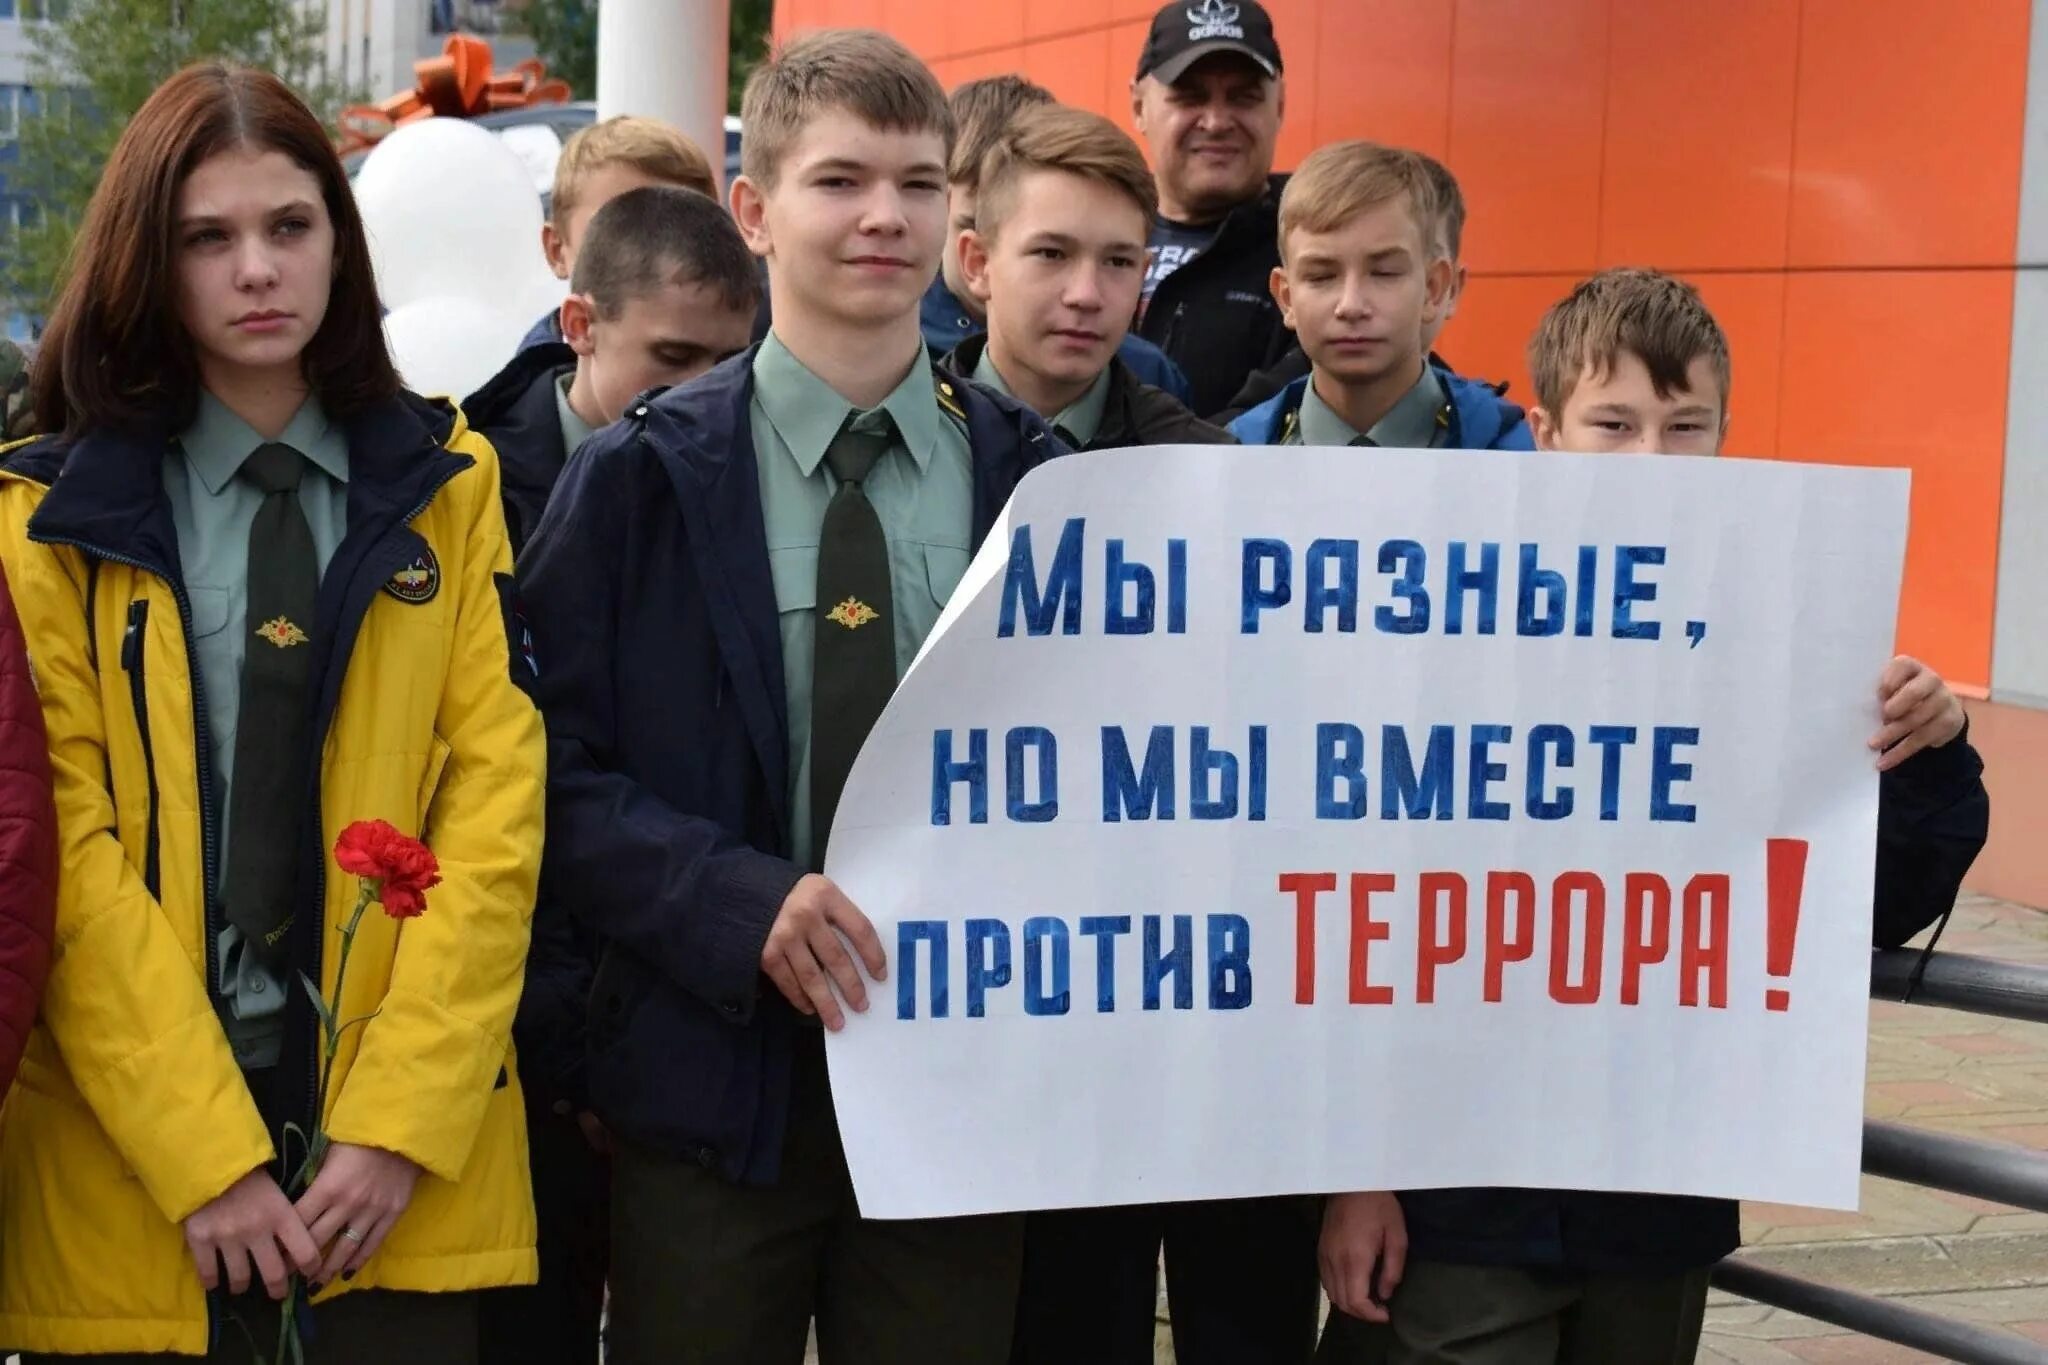 Люди против детей. Молодежь против терроризма. Молодежь против террора. Молодежь России против террора. Акция молодежь против террора.